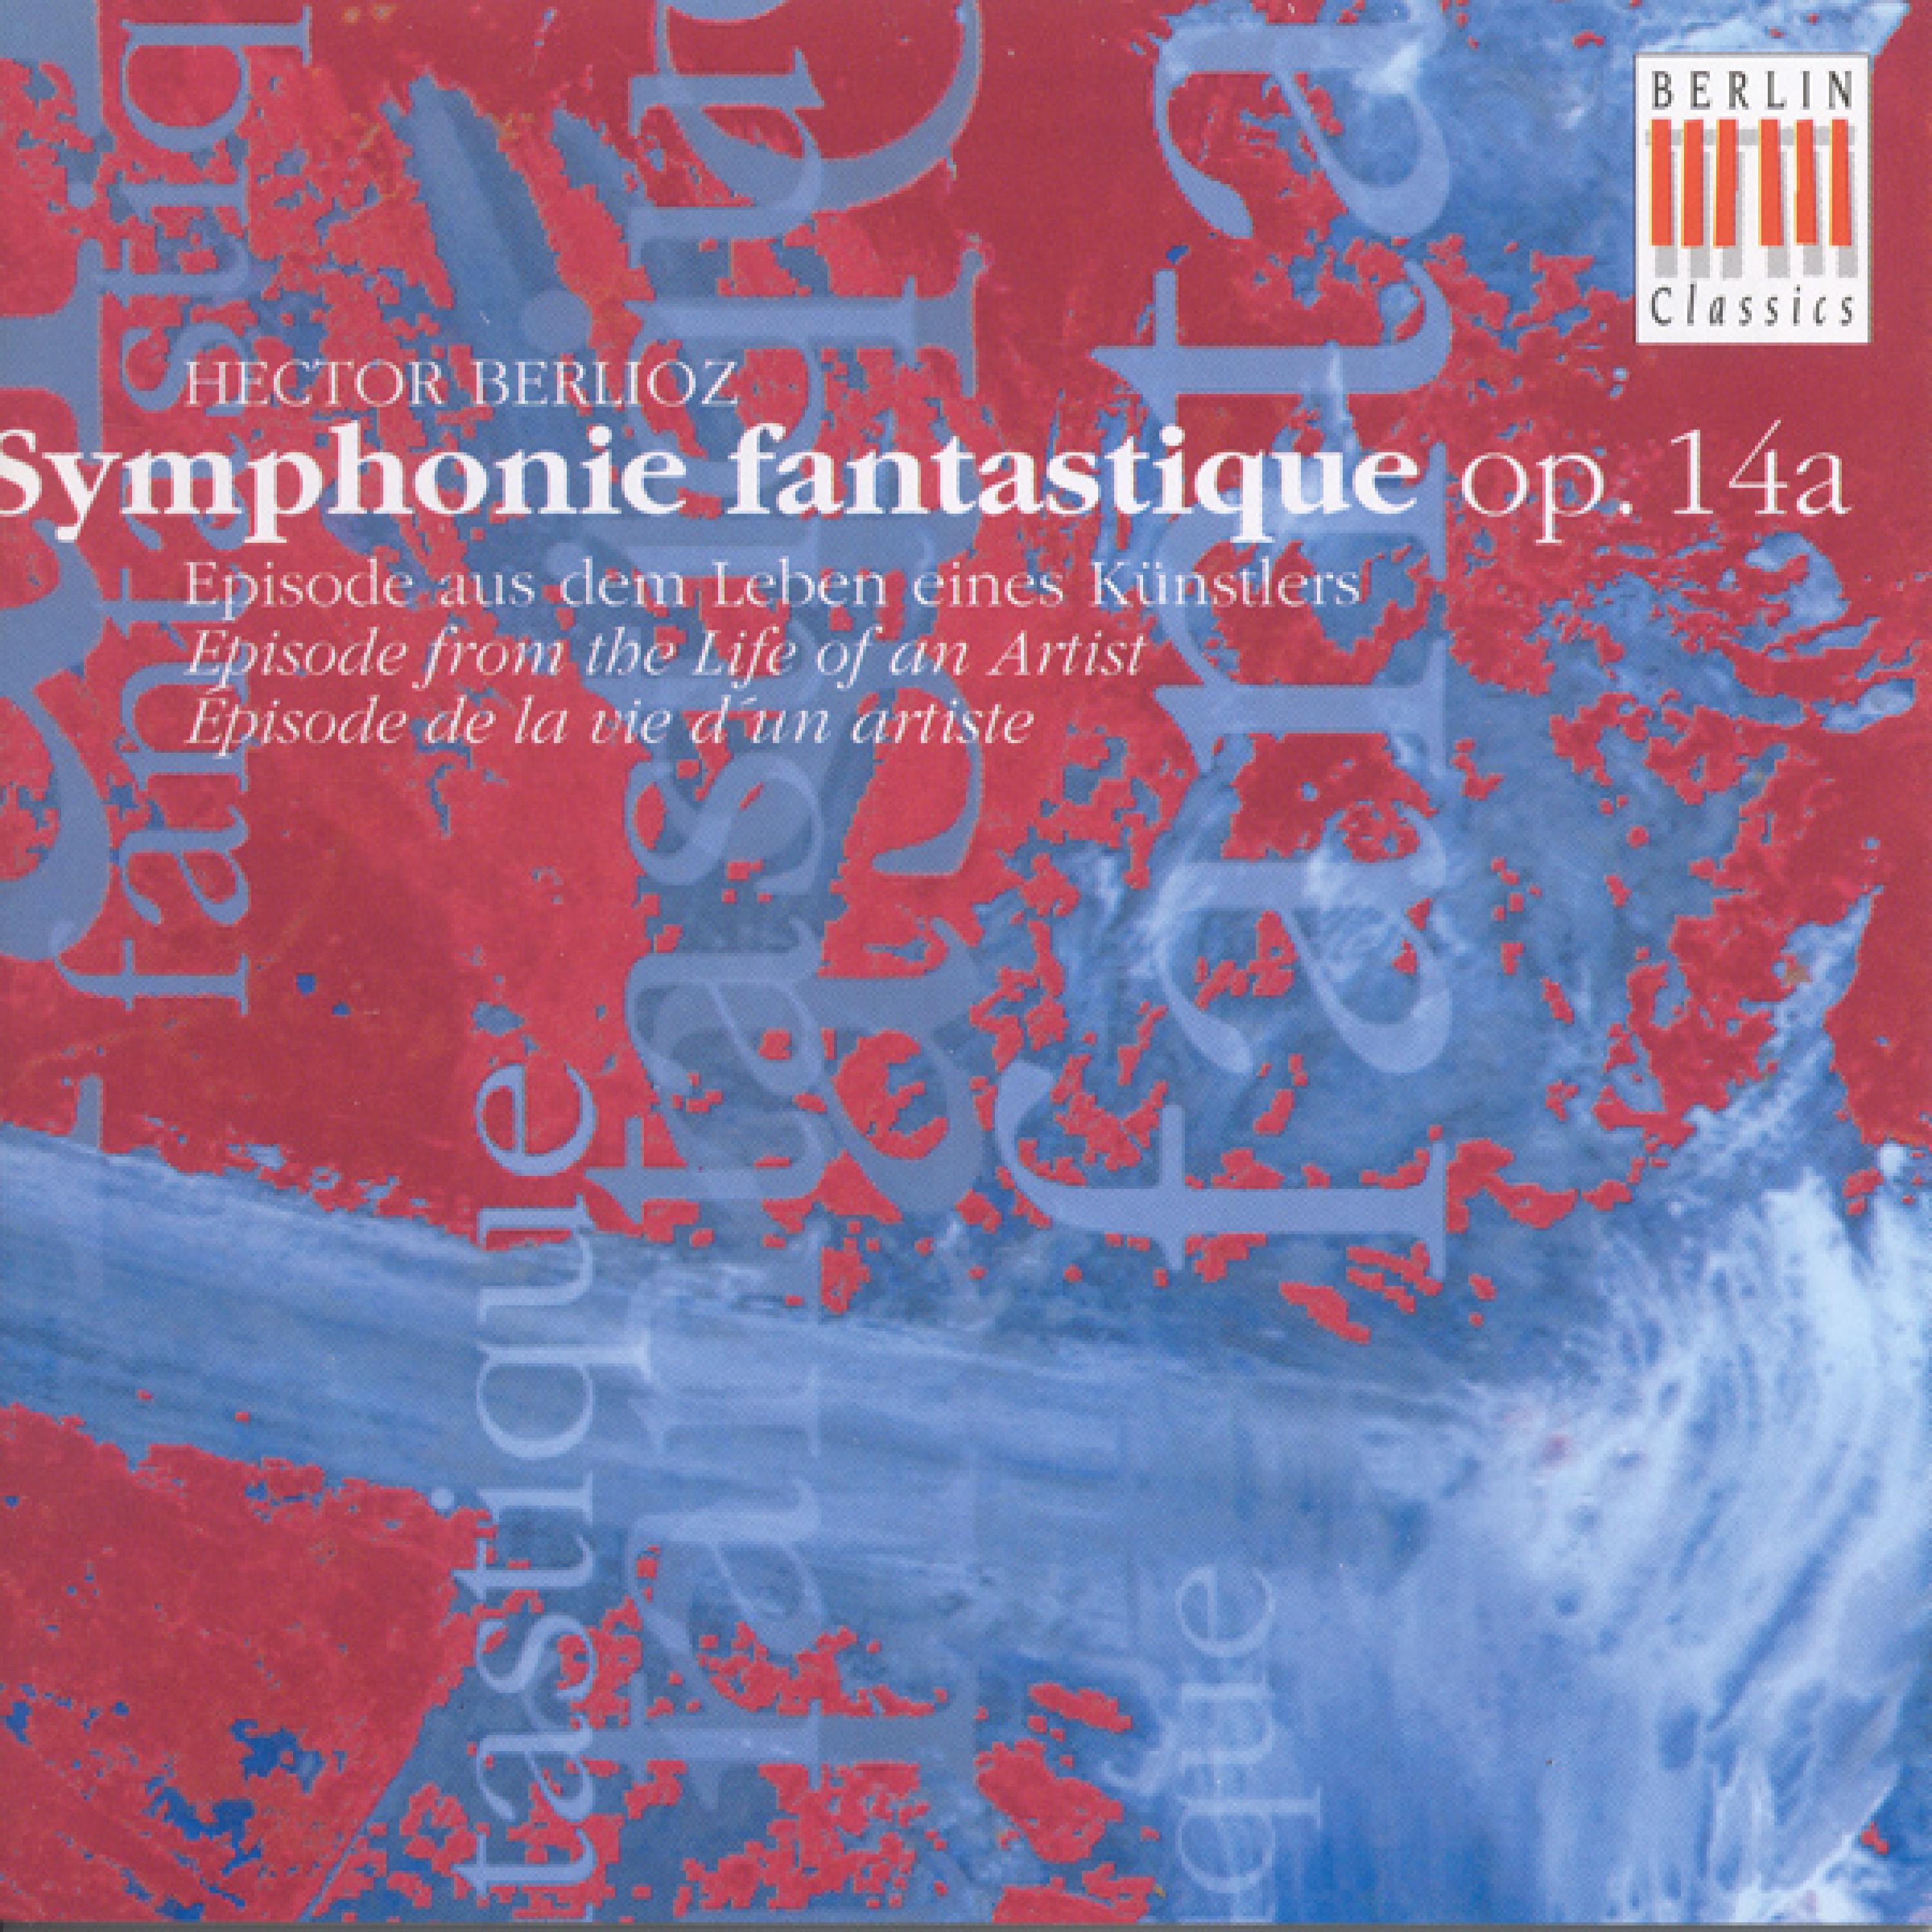 Symphonie fantastique Op. 14: II. Un Bal (Valse): Allegro non troppo